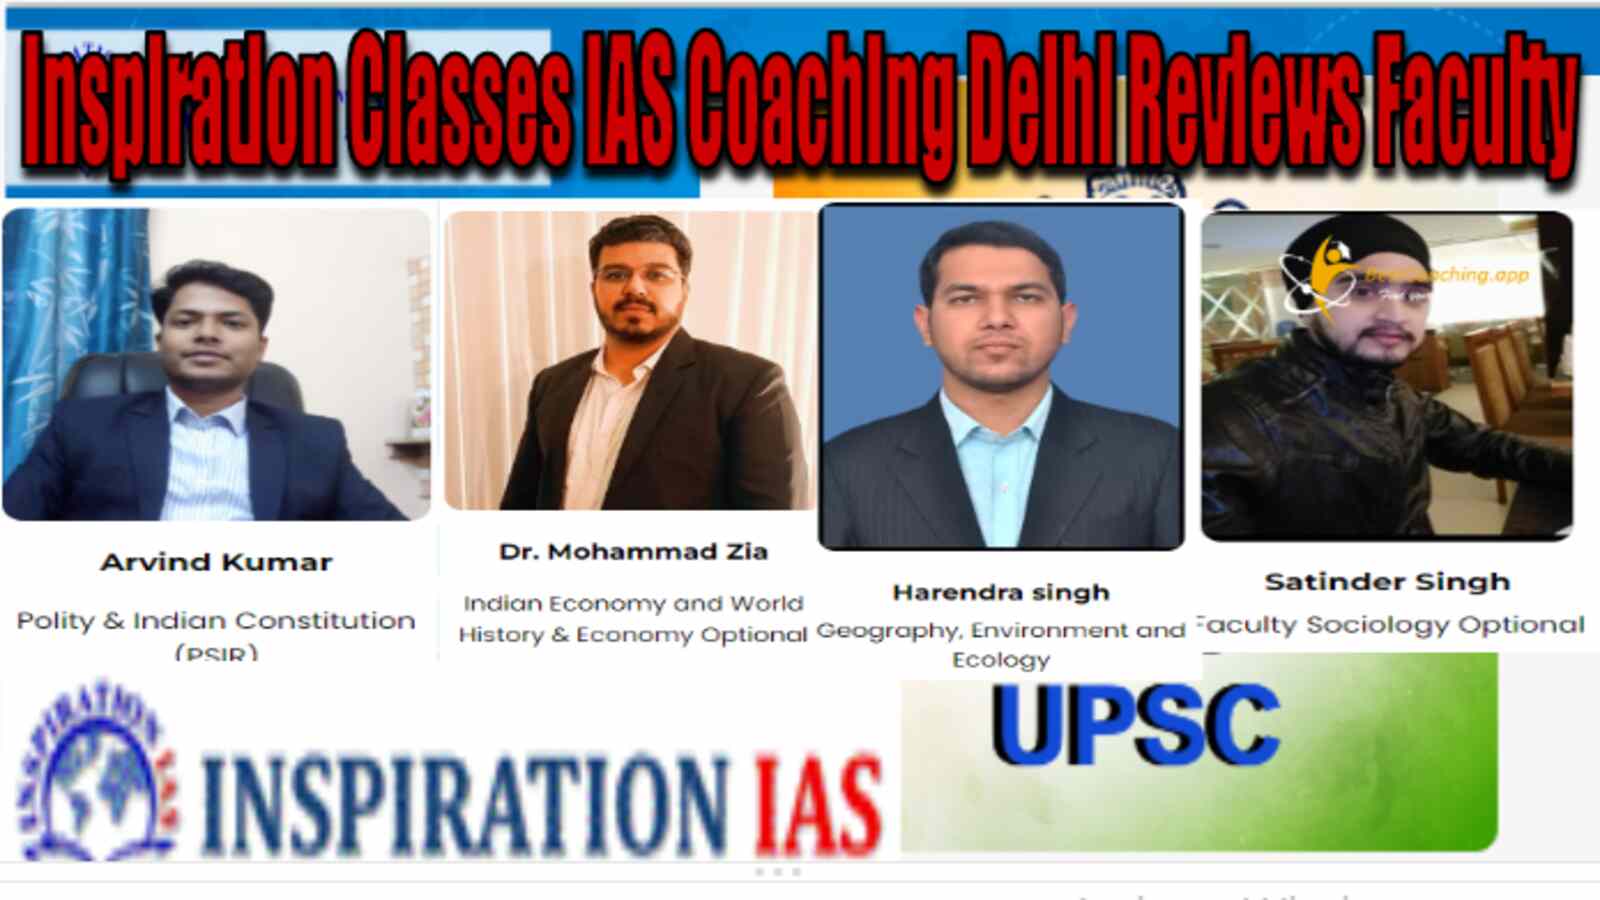 Inspiration Classes IAS Coaching Delhi Review Faculty